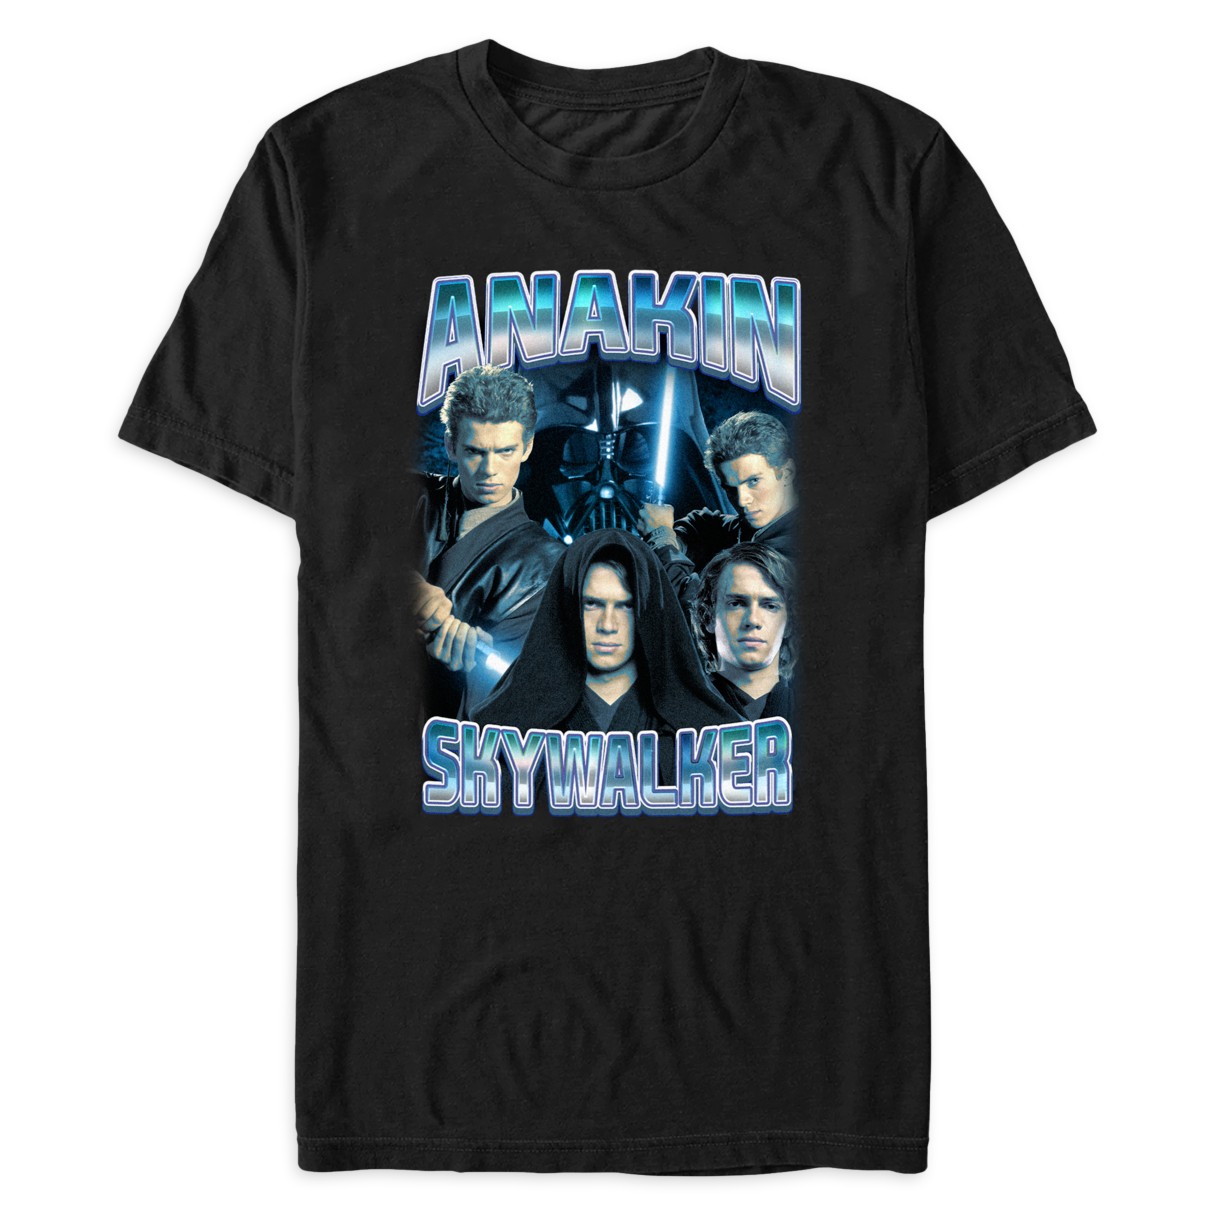 Anakin Skywalker T-Shirt for Adults – Star Wars